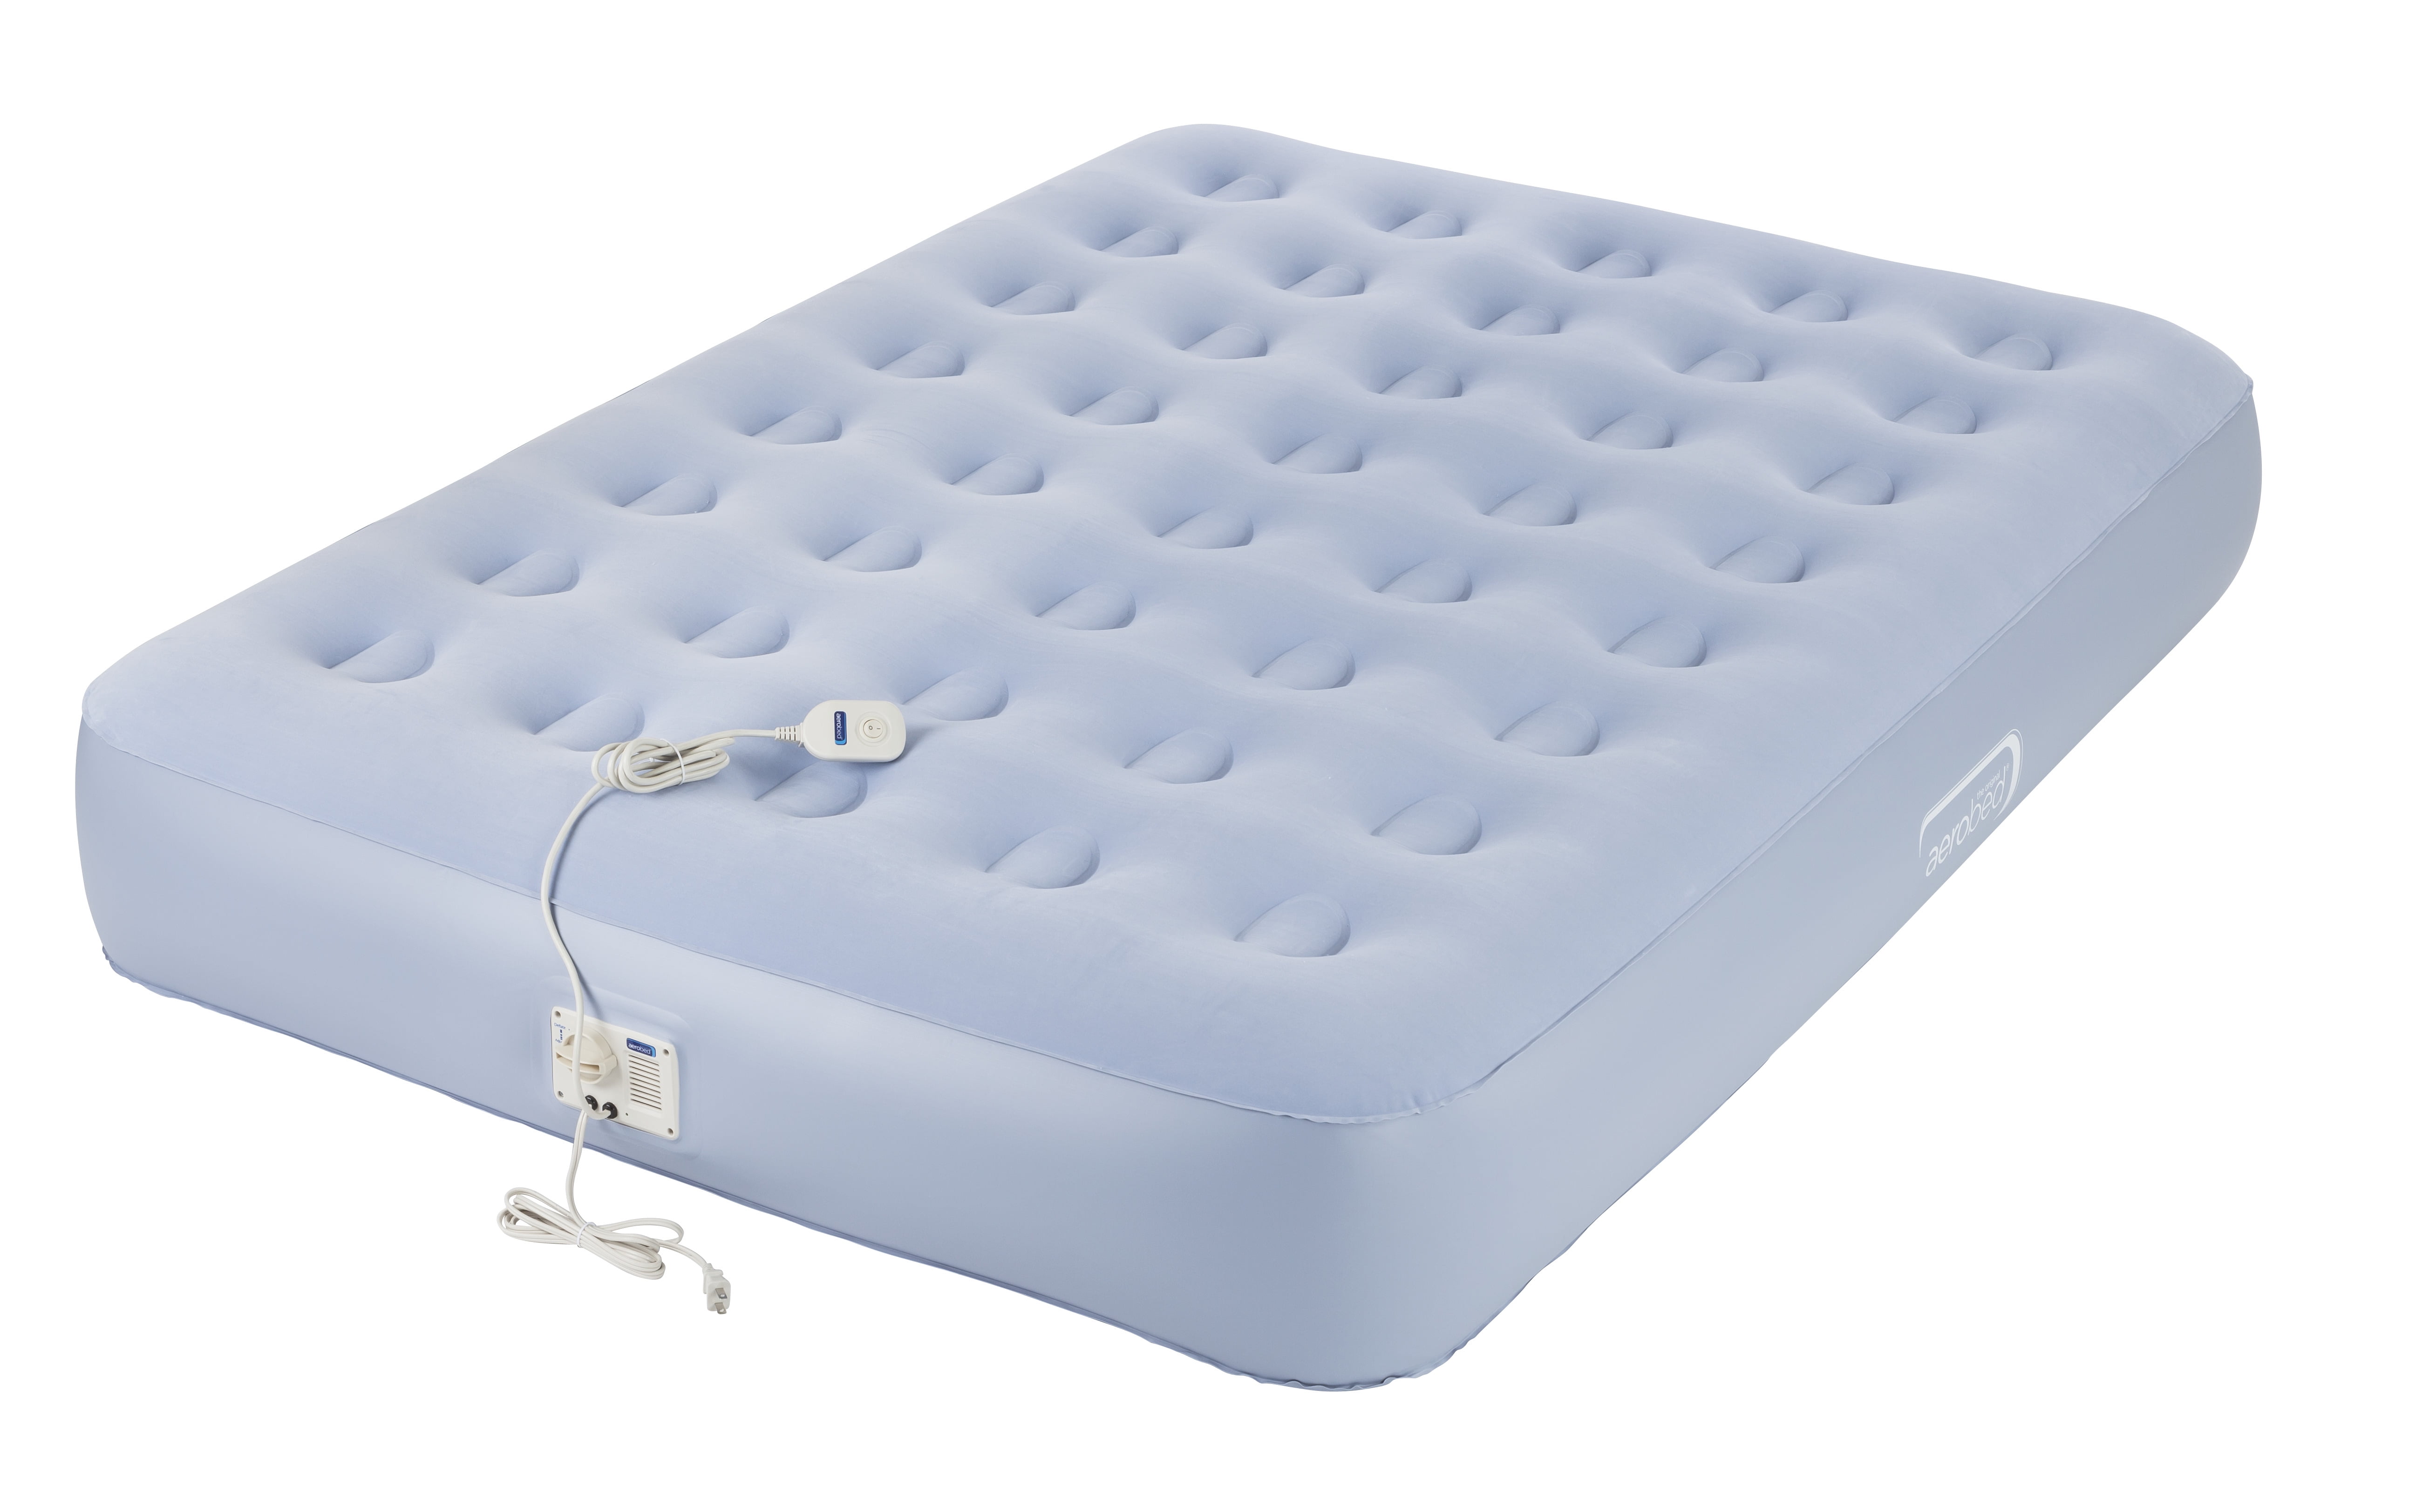 aerobed air mattress built-in pump headboard